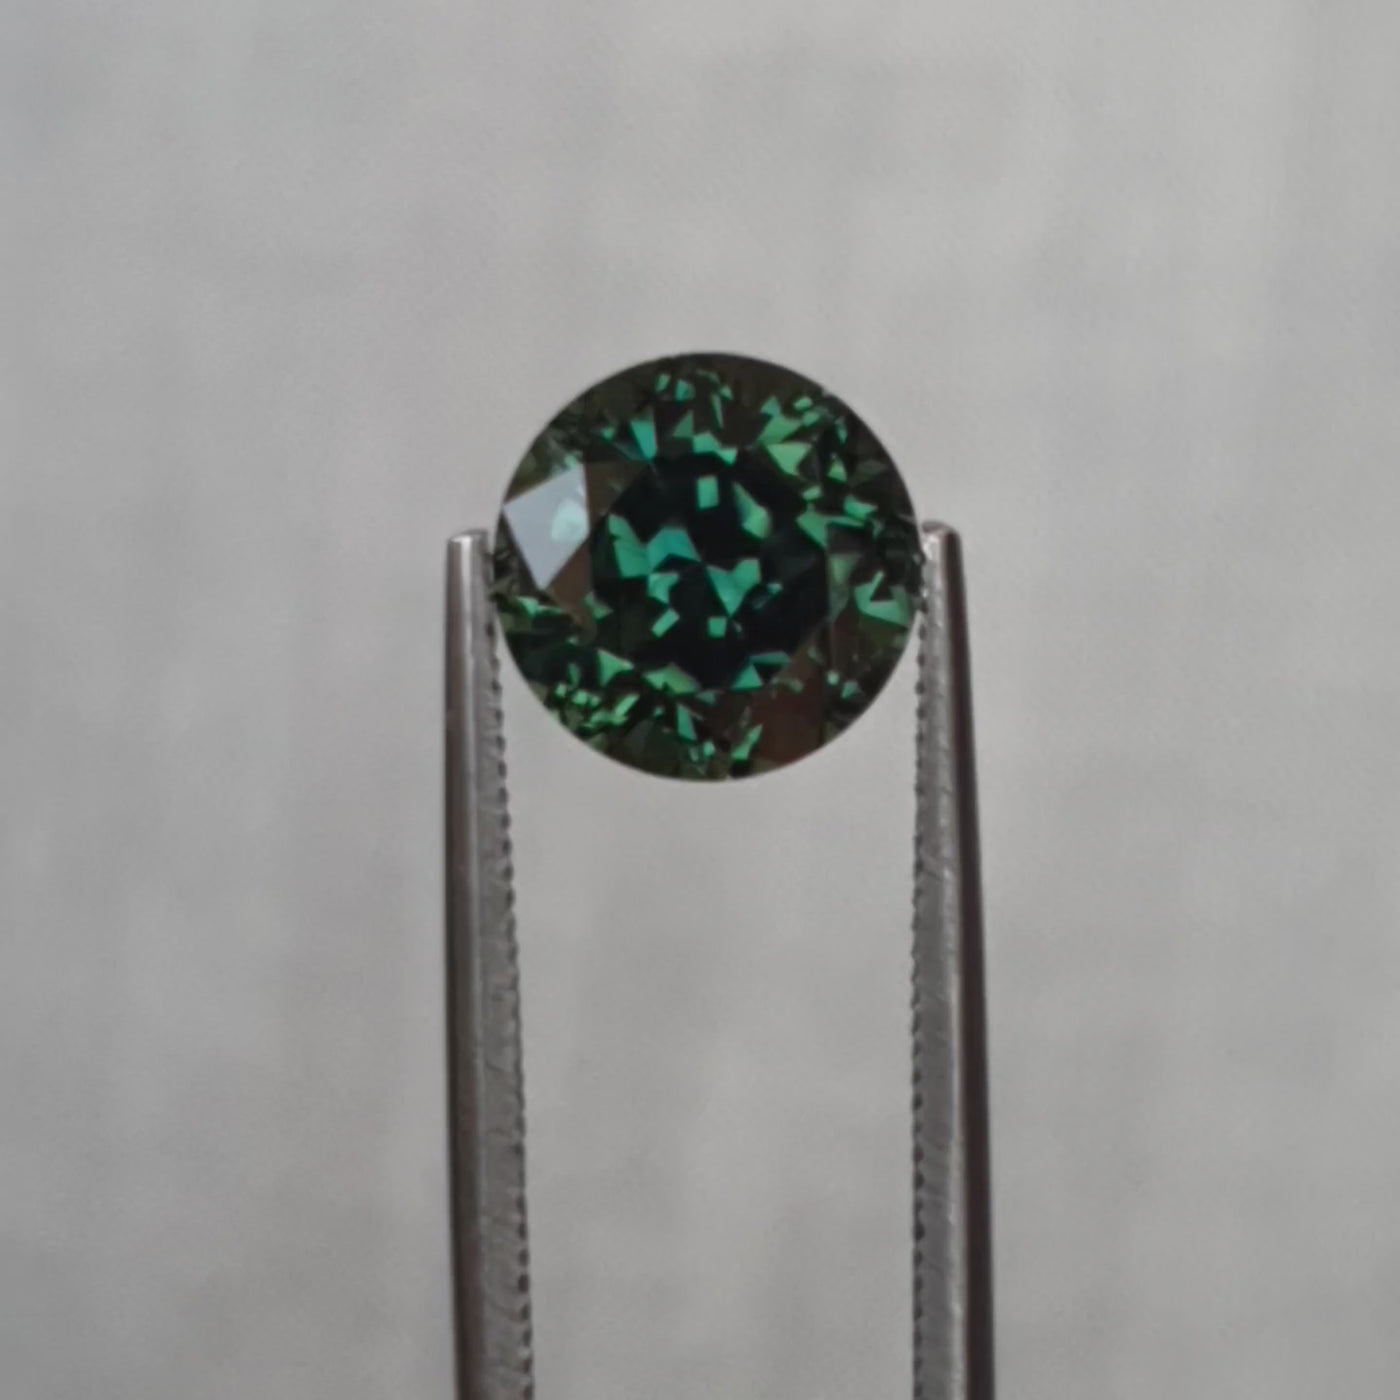 3.92ct Australian Sapphire, Deep Teal, Green - Round